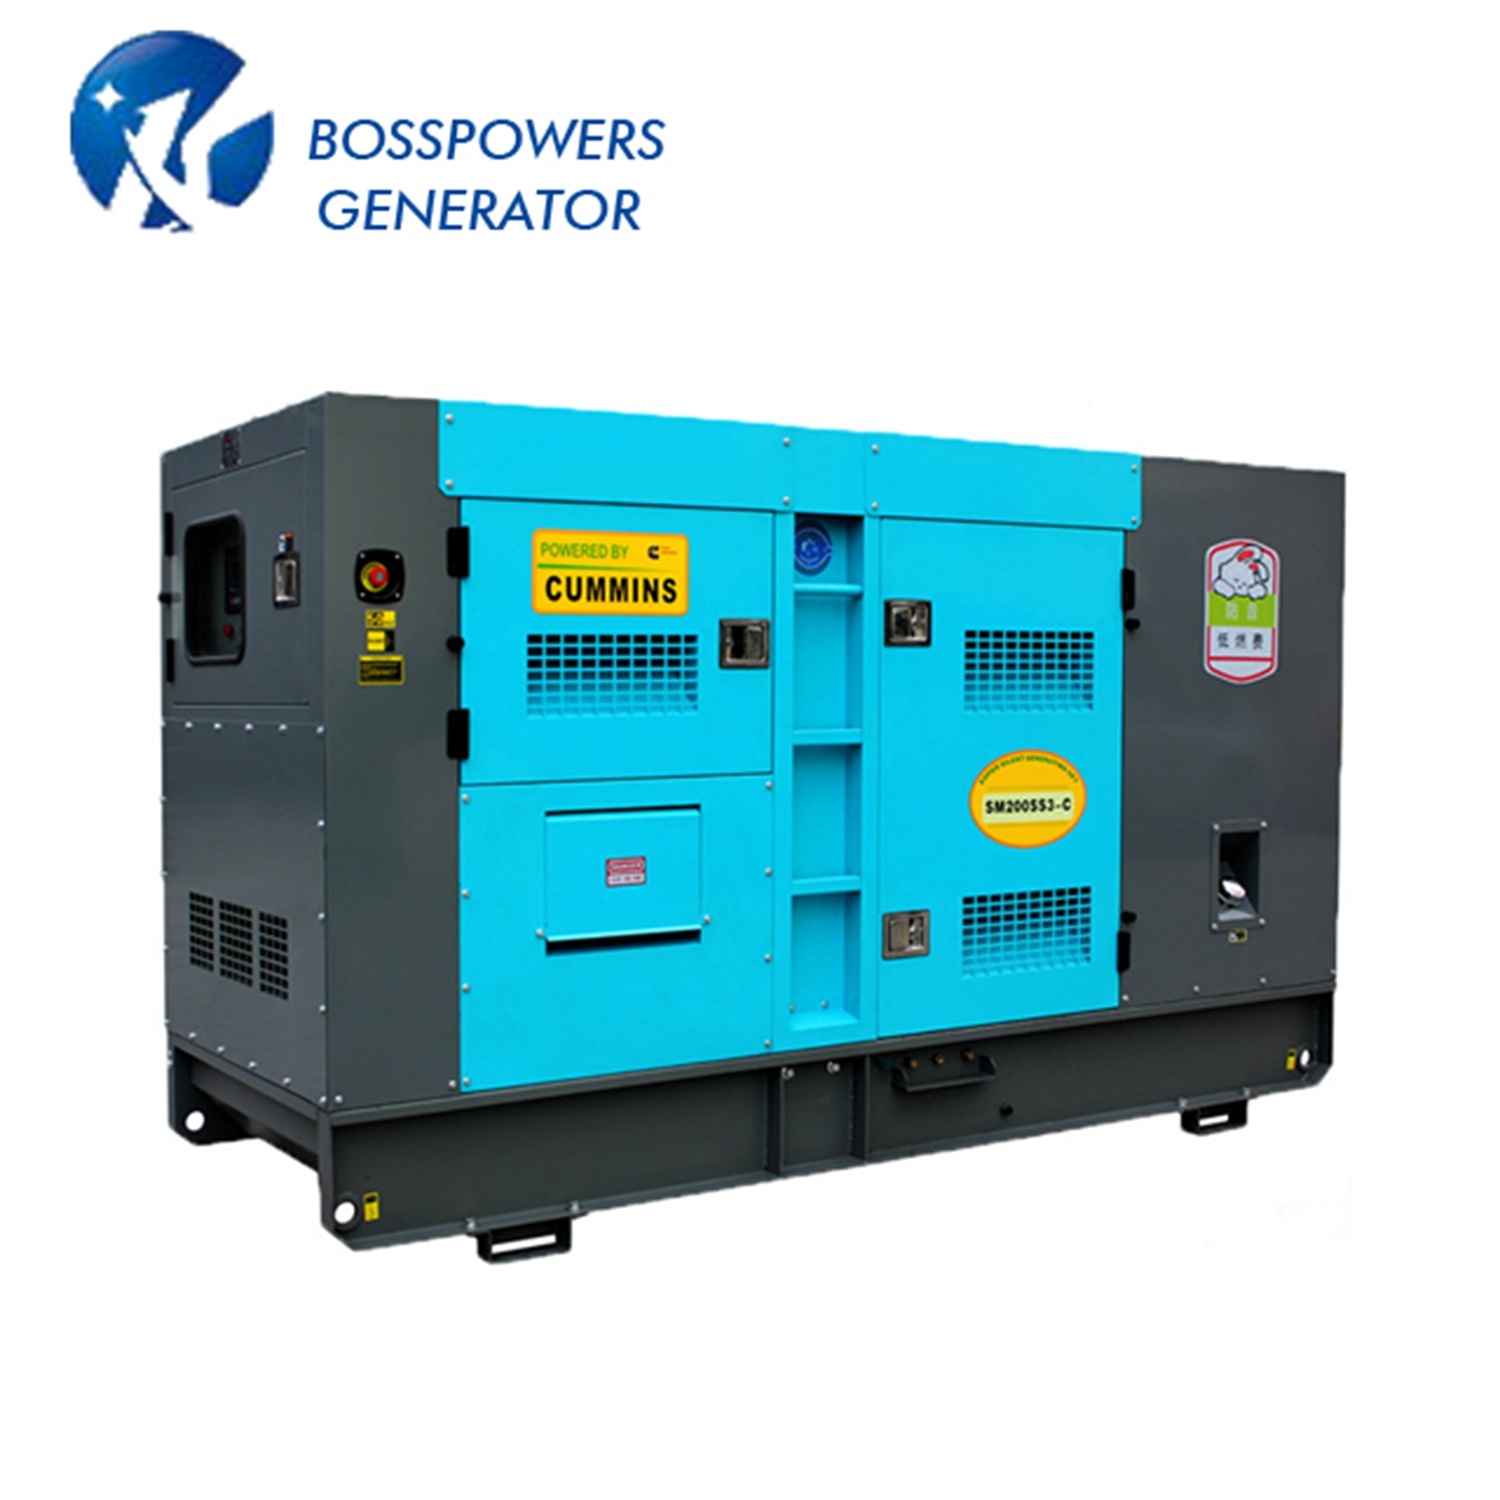 Rated Prime Power 90kw 60Hz Weichai Industrial Electric Diesel Genset